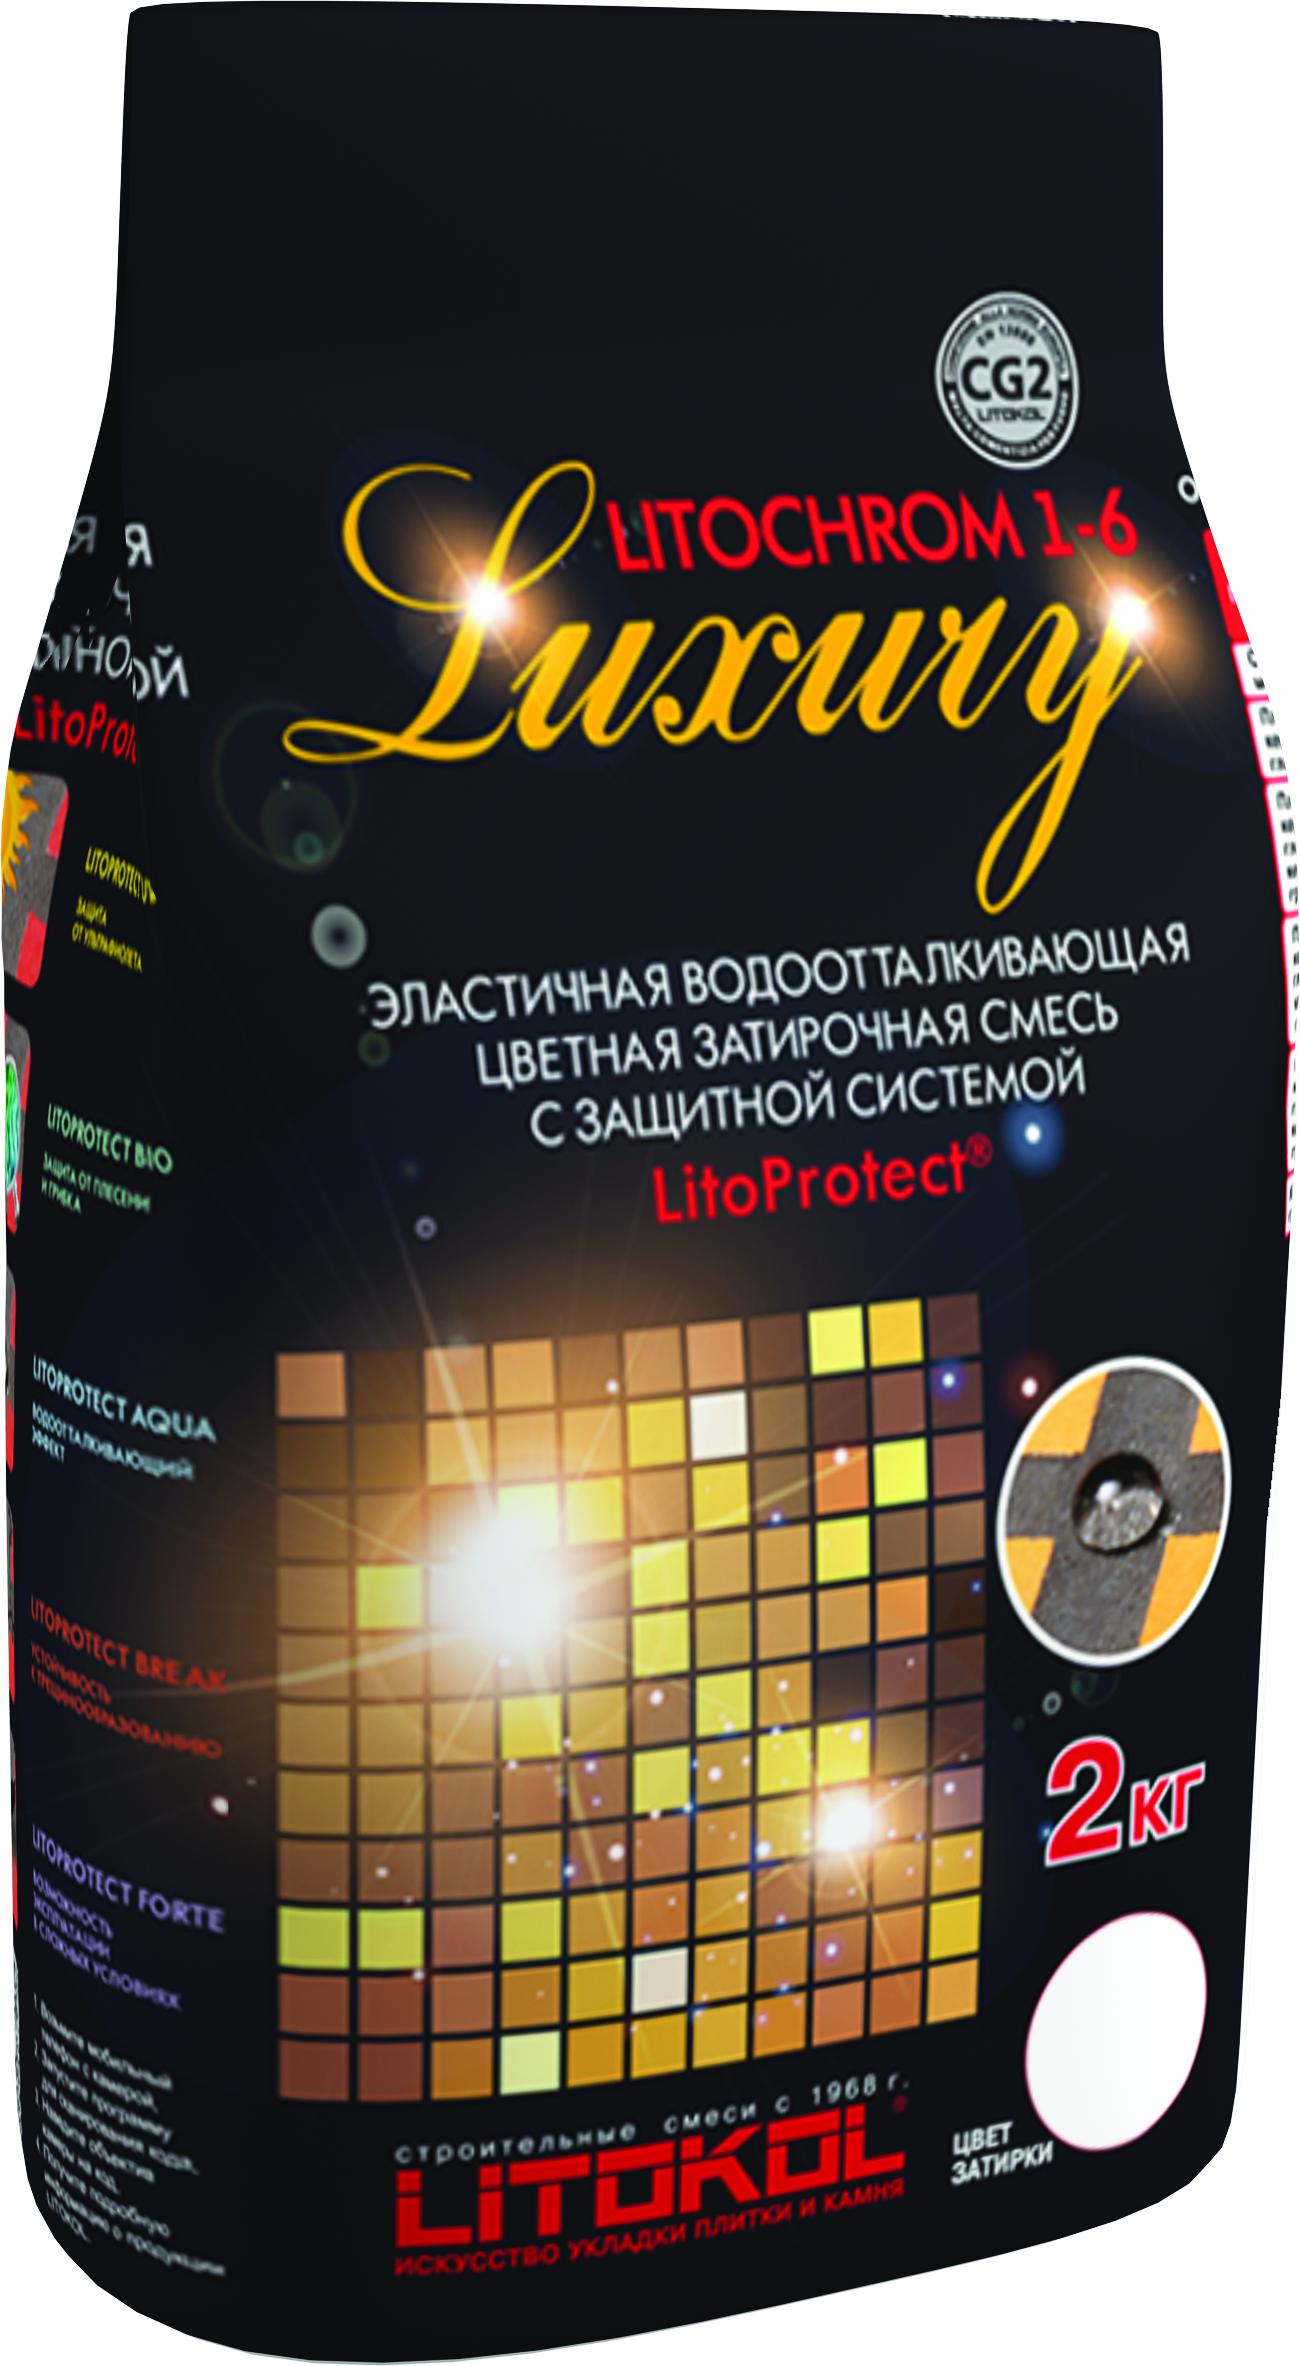 Купить Litokol Litochrom 1-6 Luxury C.630, 2 кг